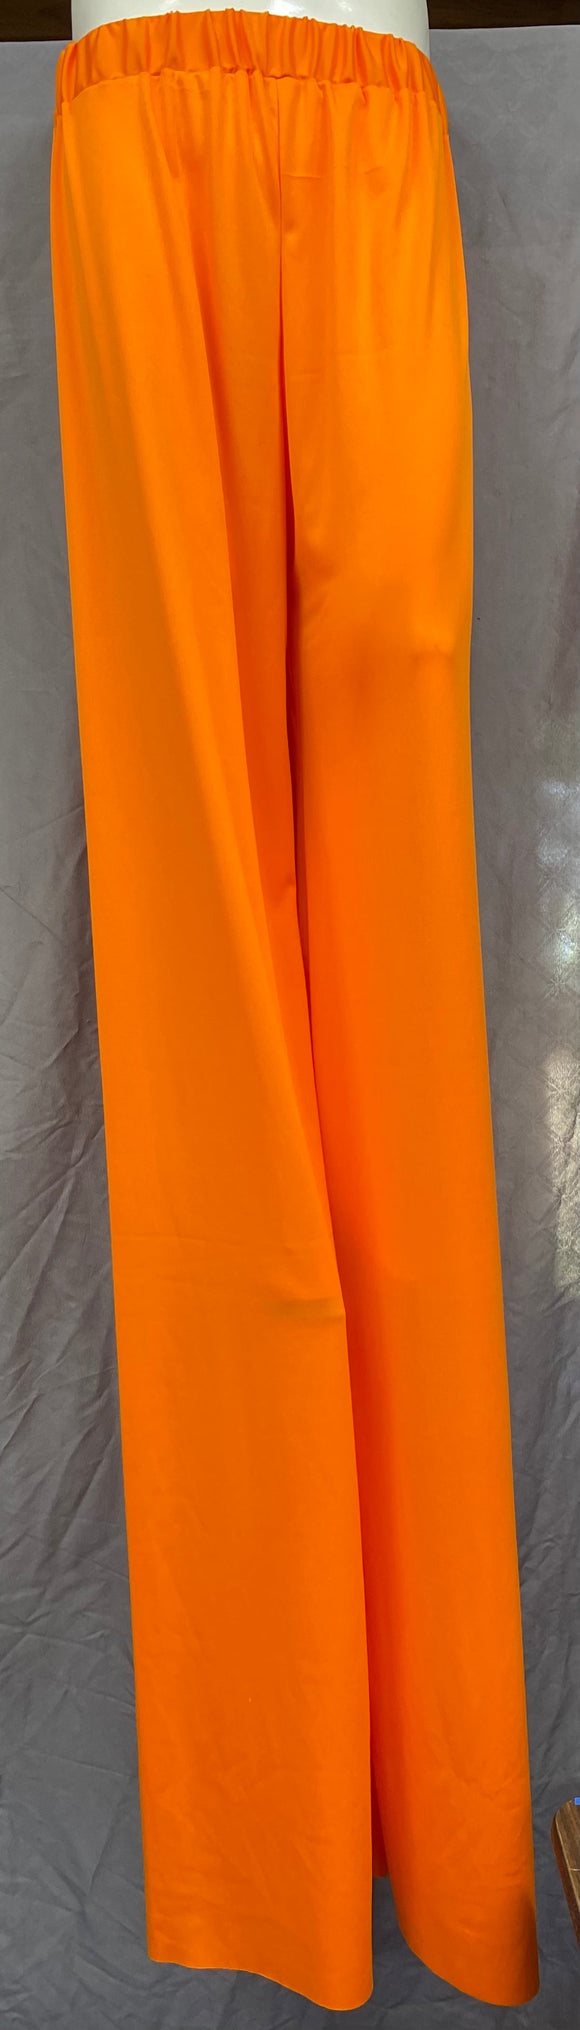 Stilt Pants - Neon Orange Matte 78